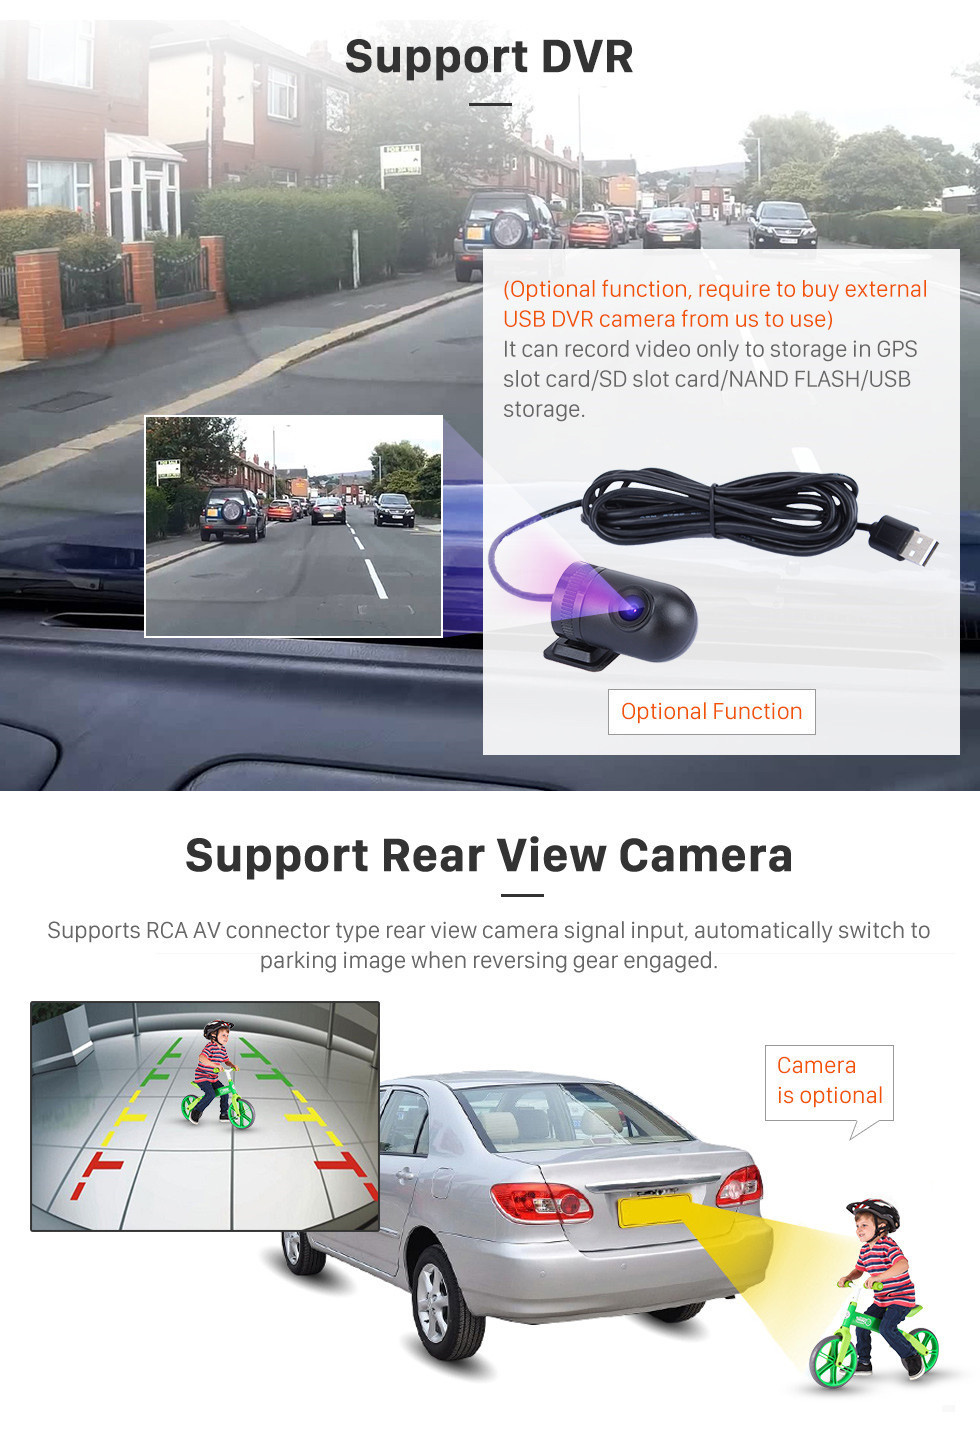 Seicane Pantalla táctil HD 2009 Nissan Sylphy Android 11.0 10.1 pulgadas Navegación GPS Radio Bluetooth USB Carplay WIFI AUX compatible con DAB + Control del volante